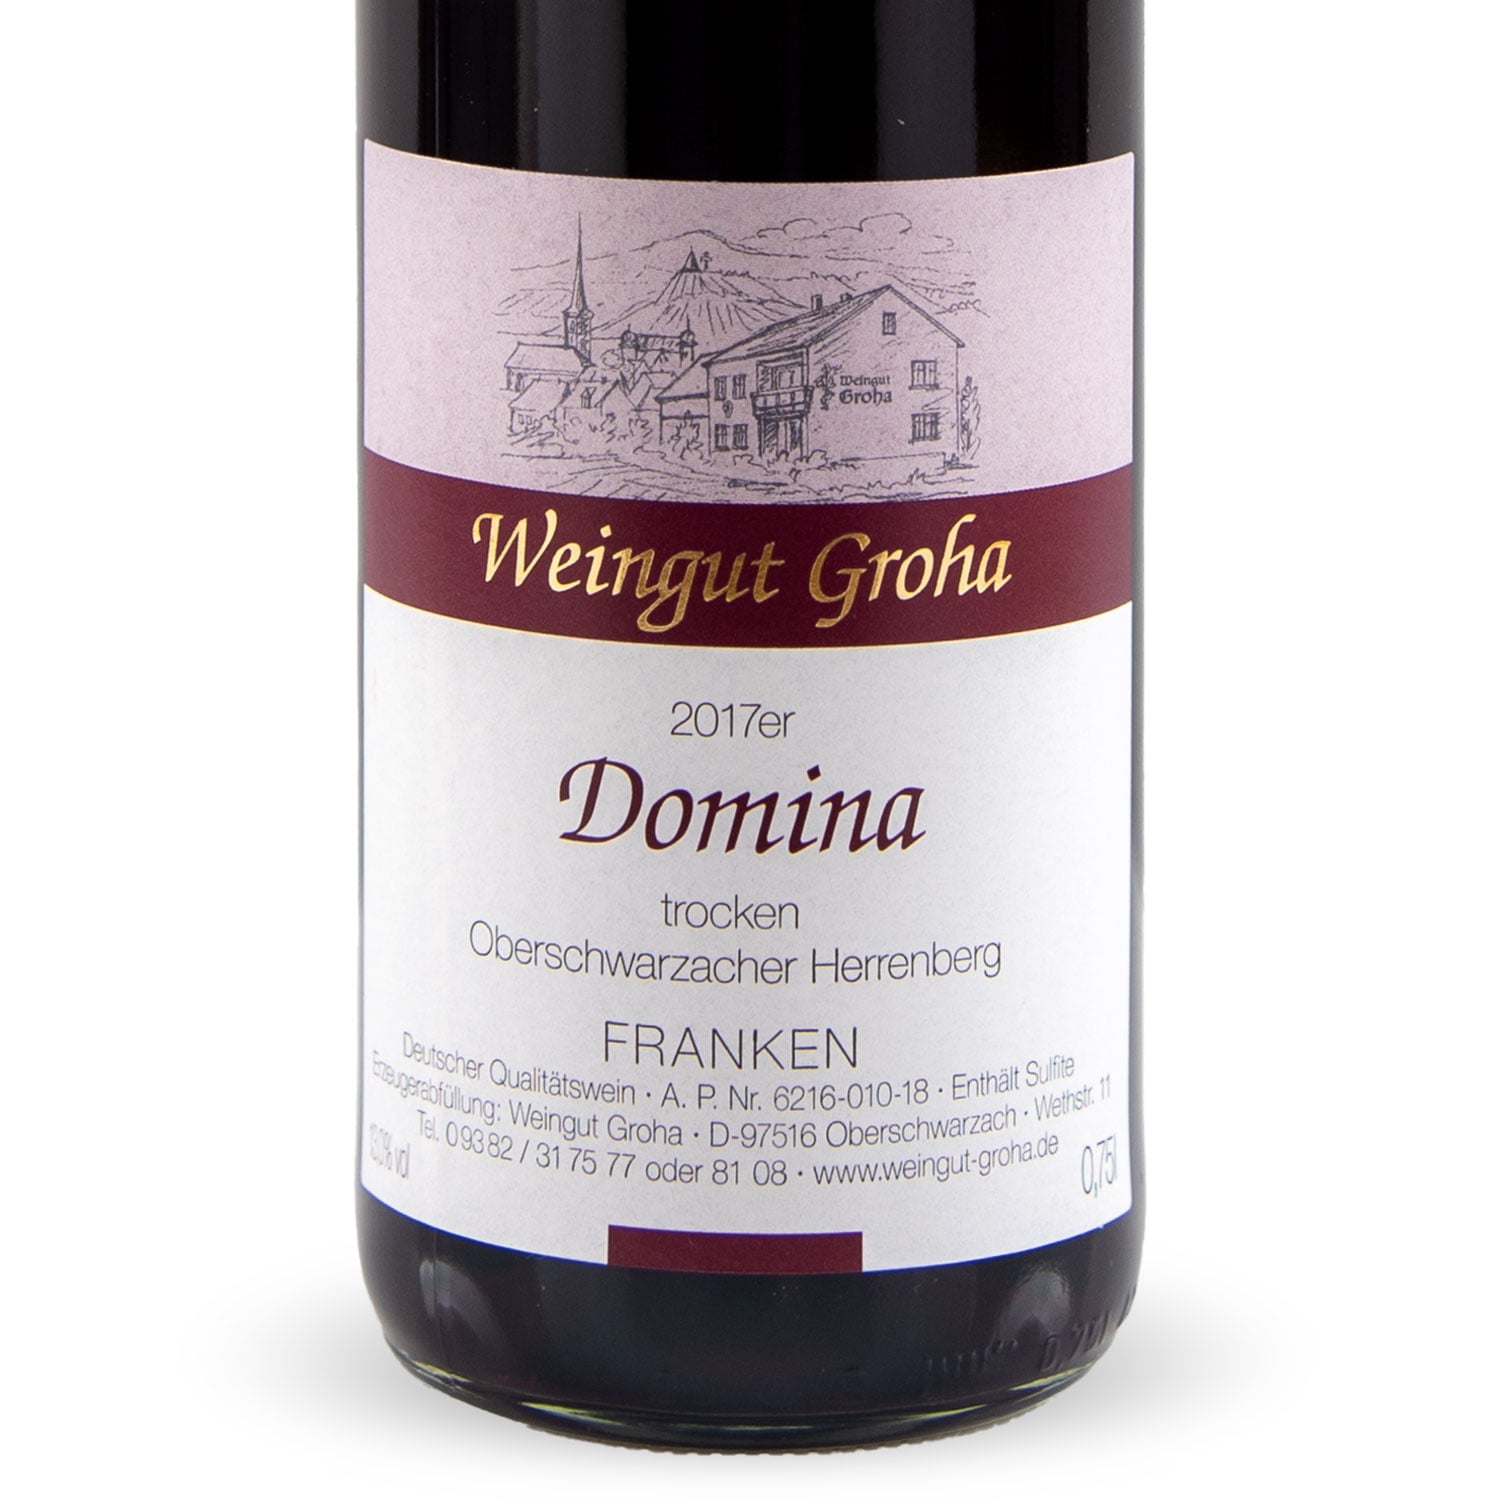 Domina trocken 2017 - Weingut Groha